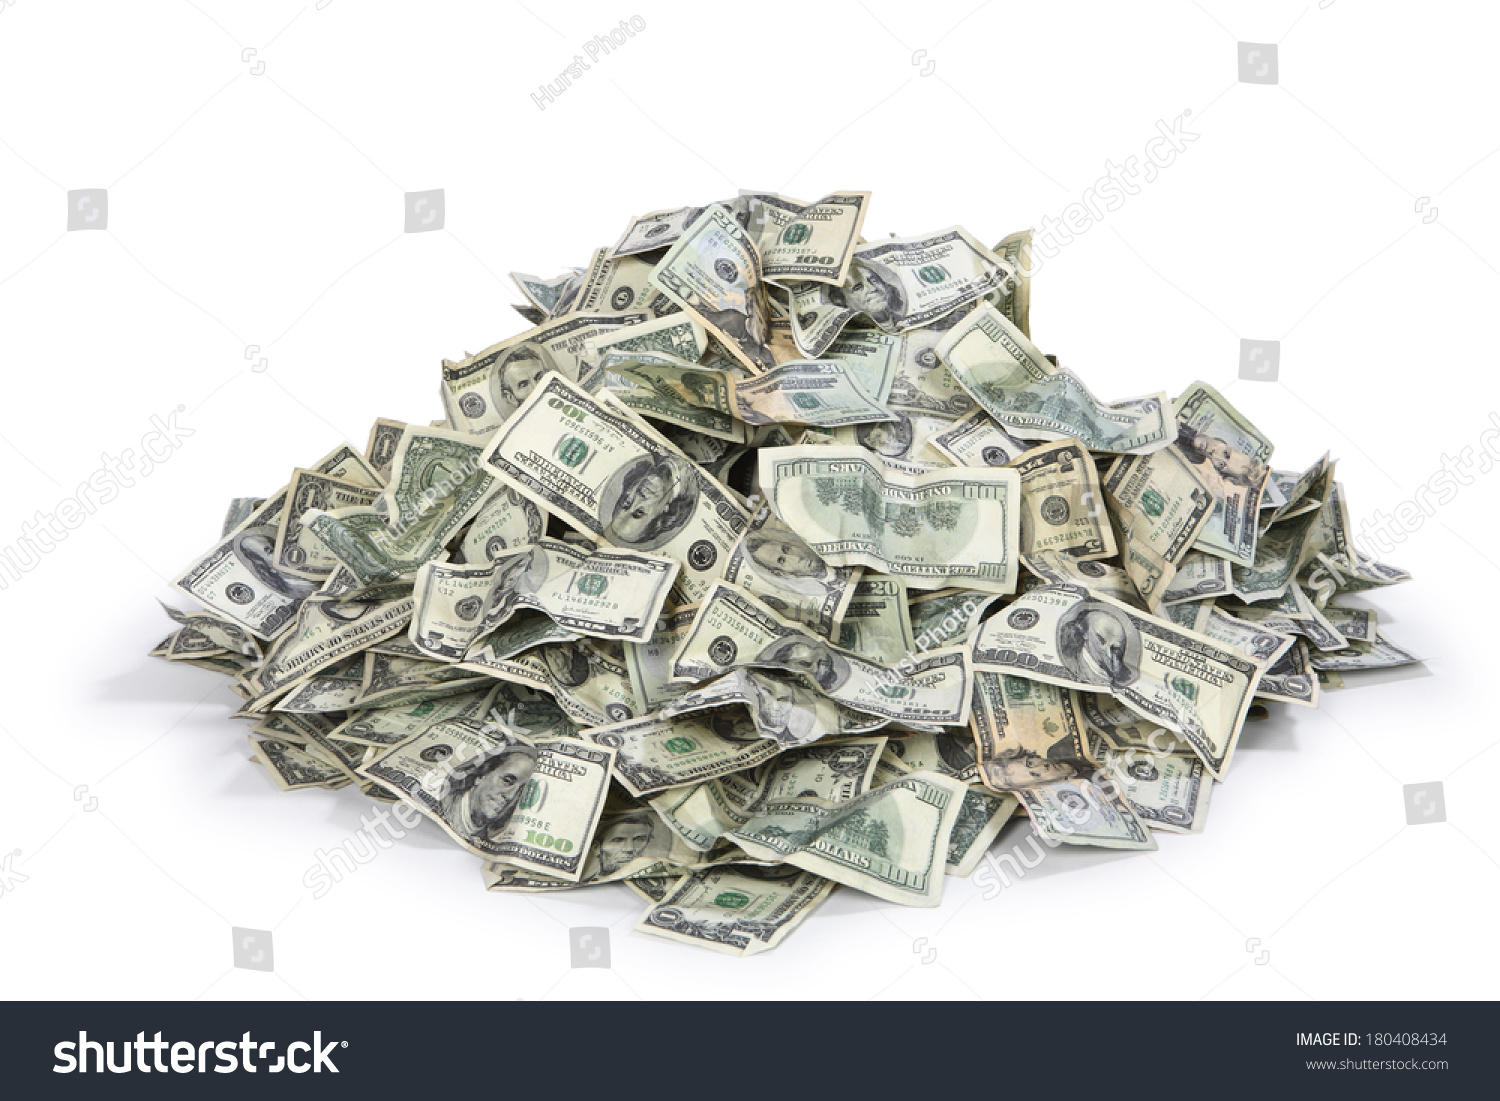 Pile of US money #180408434